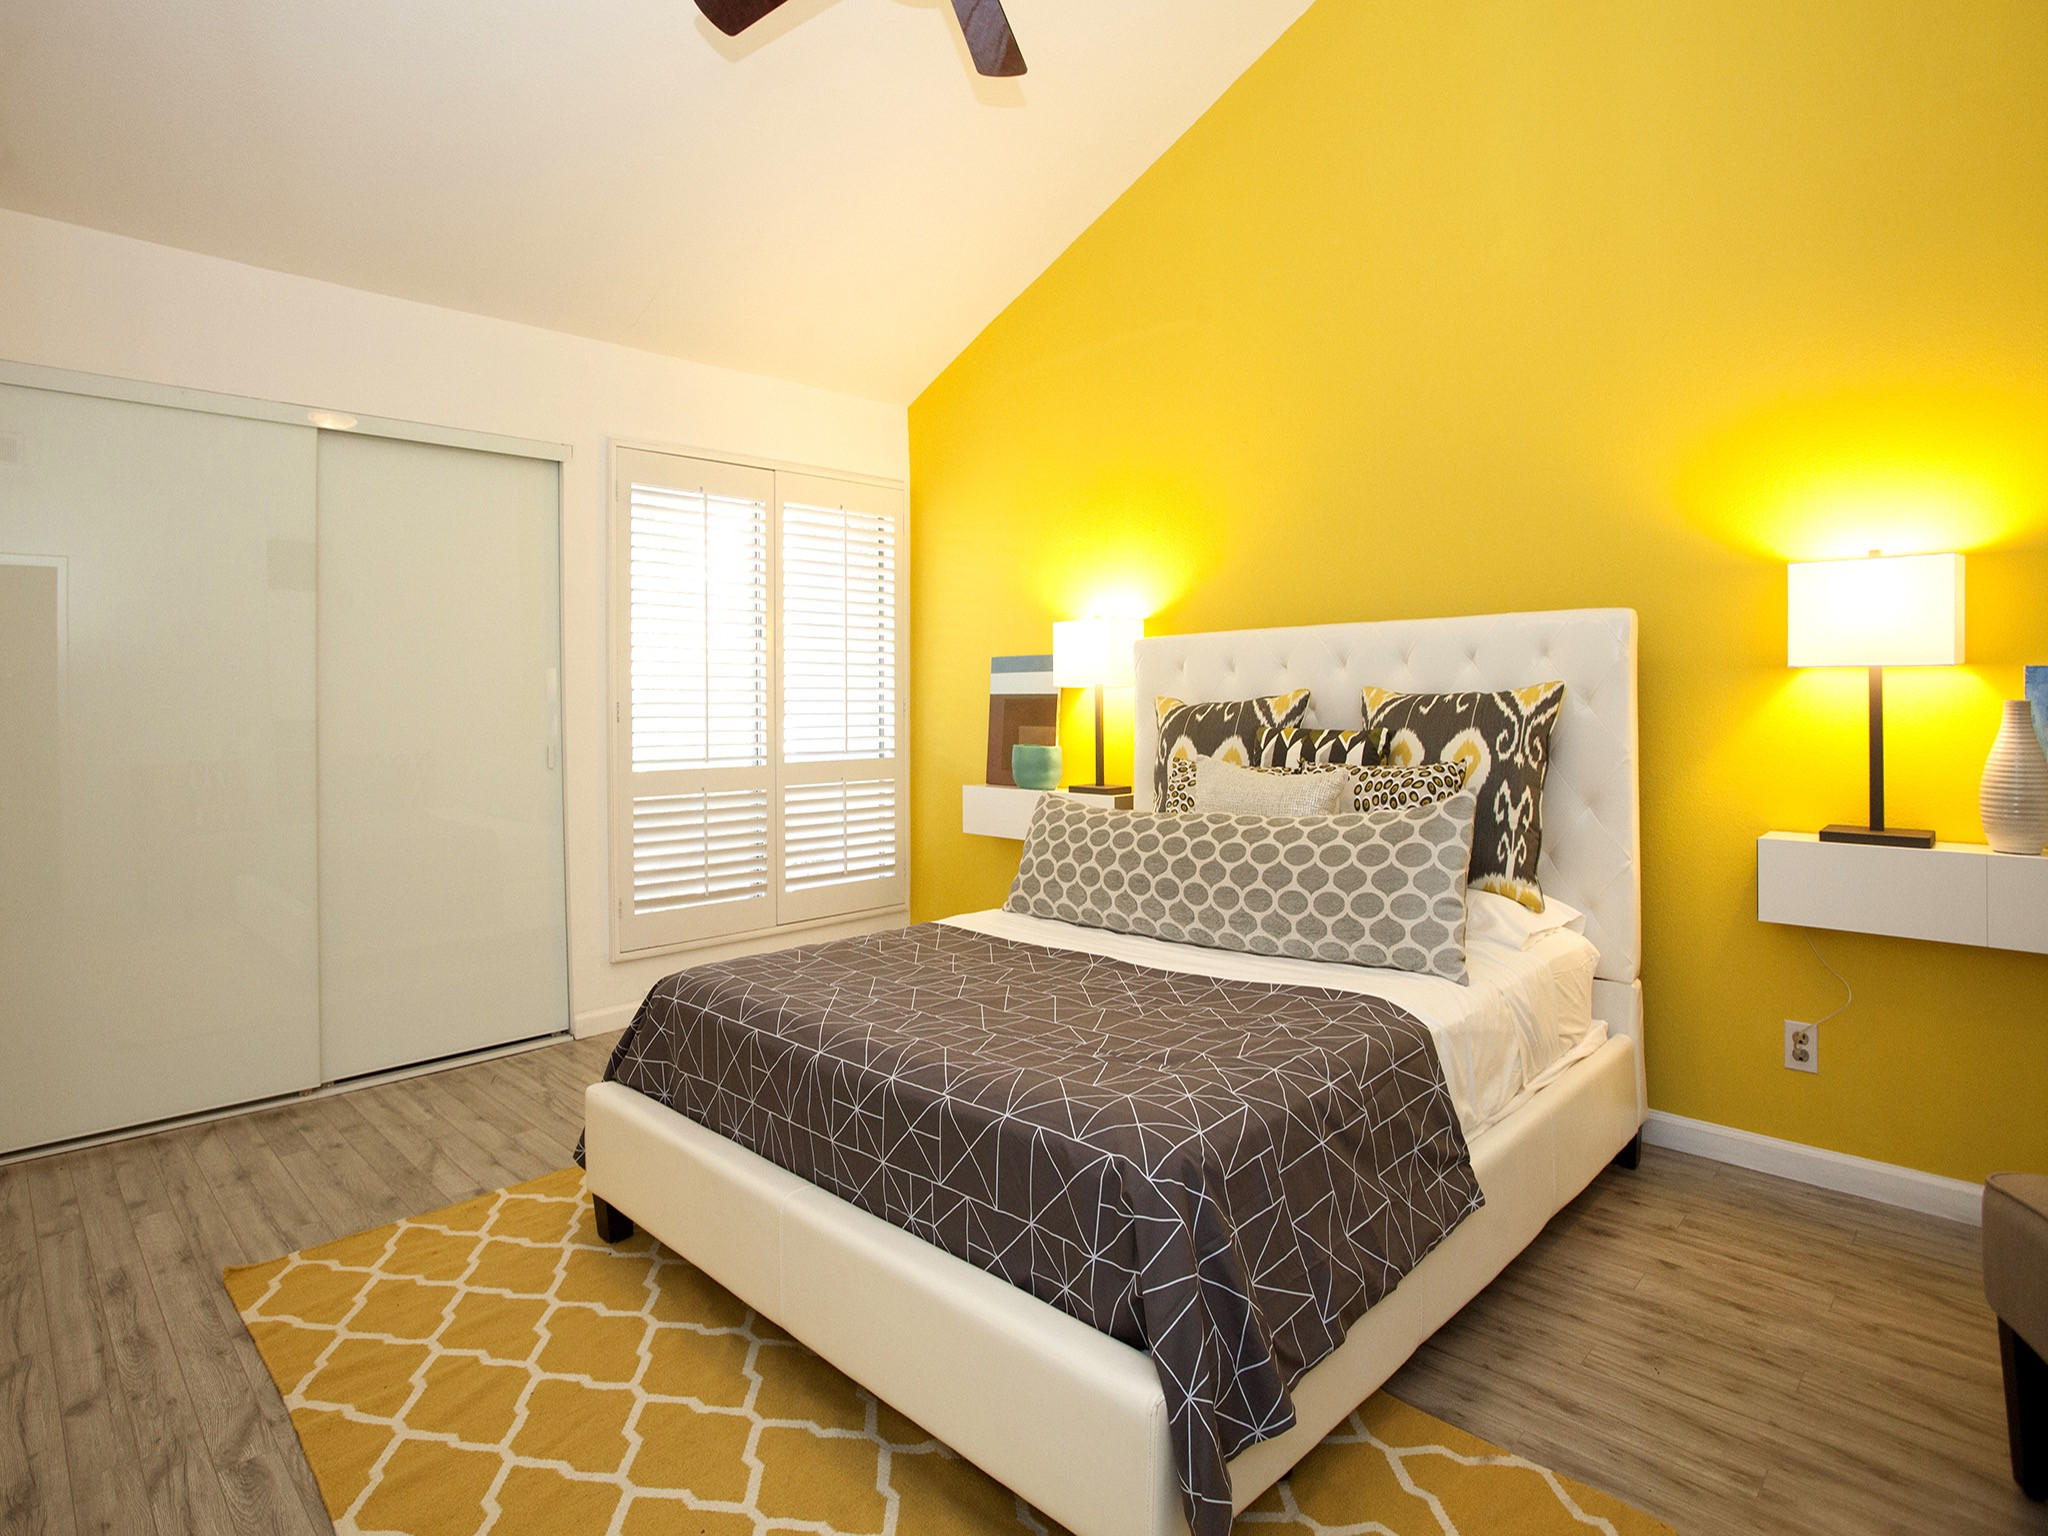 Yellow Walls Bedroom
 Modern Bedroom Decor In fortable Nuance